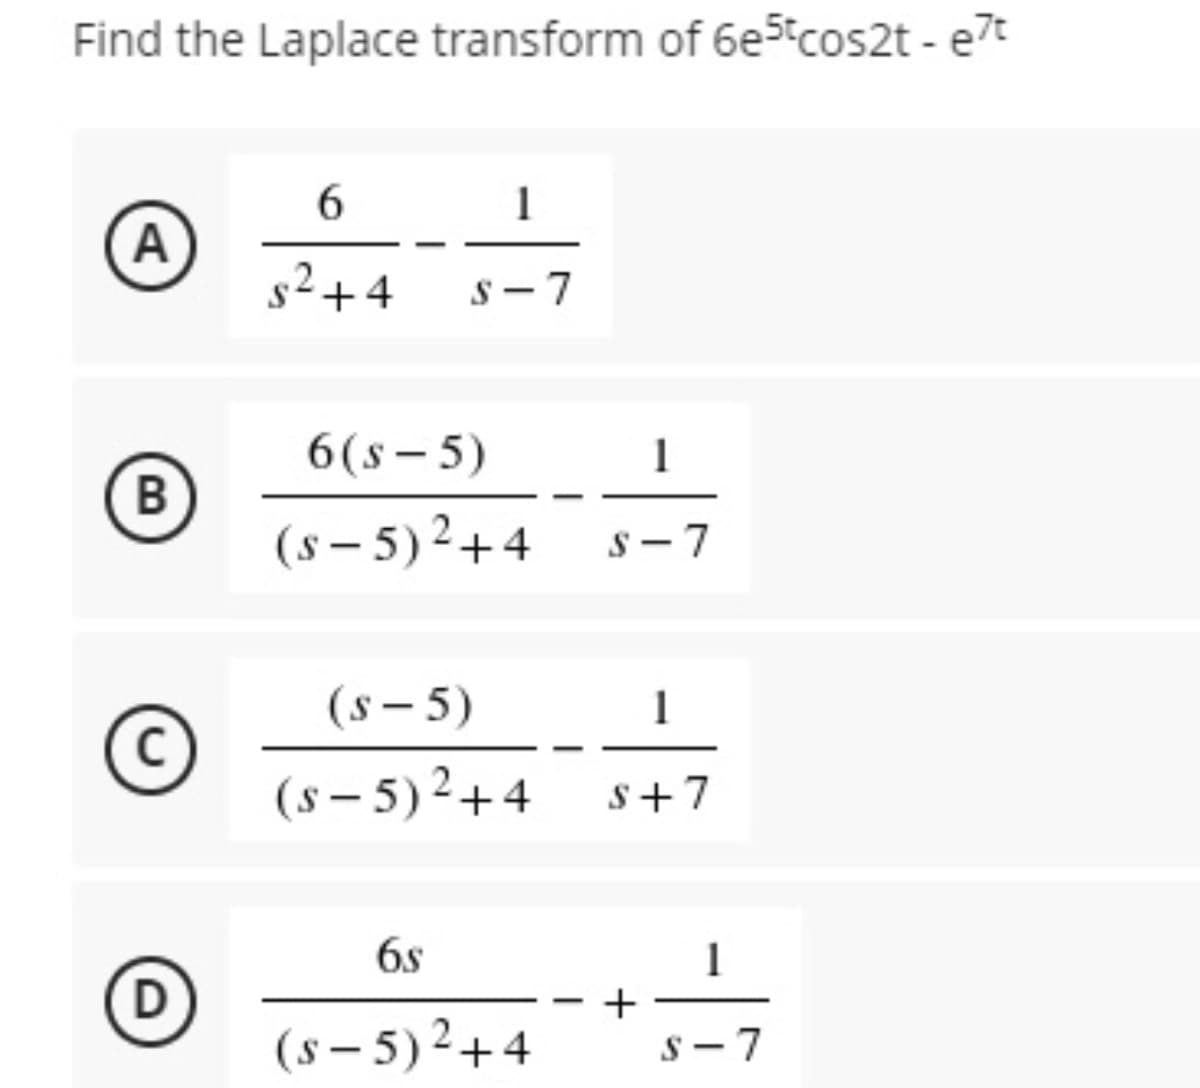 Find the Laplace transform of 6e5tcos2t - e7t
6.
1
A
s²+4
S - 7
6(s- 5)
1
В
(s – 5) 2+4
s - 7
(s – 5)
1
(s – 5) 2+4
s+7
6s
+
(s – 5)2+4
S- 7
